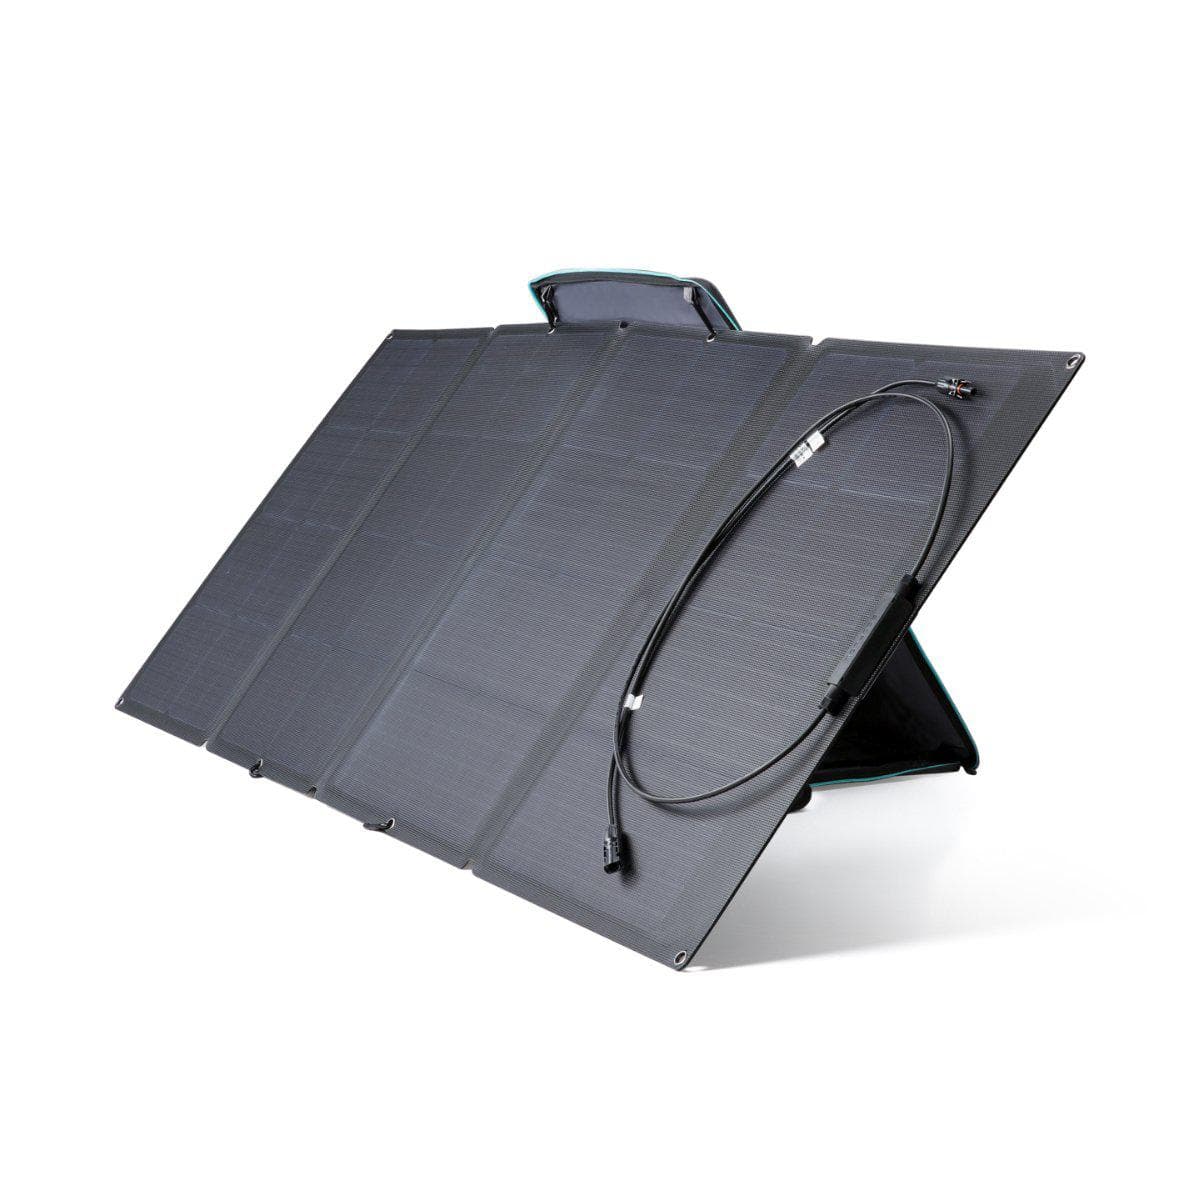 EcoFlow Portable Solar Panel | 160 Watts